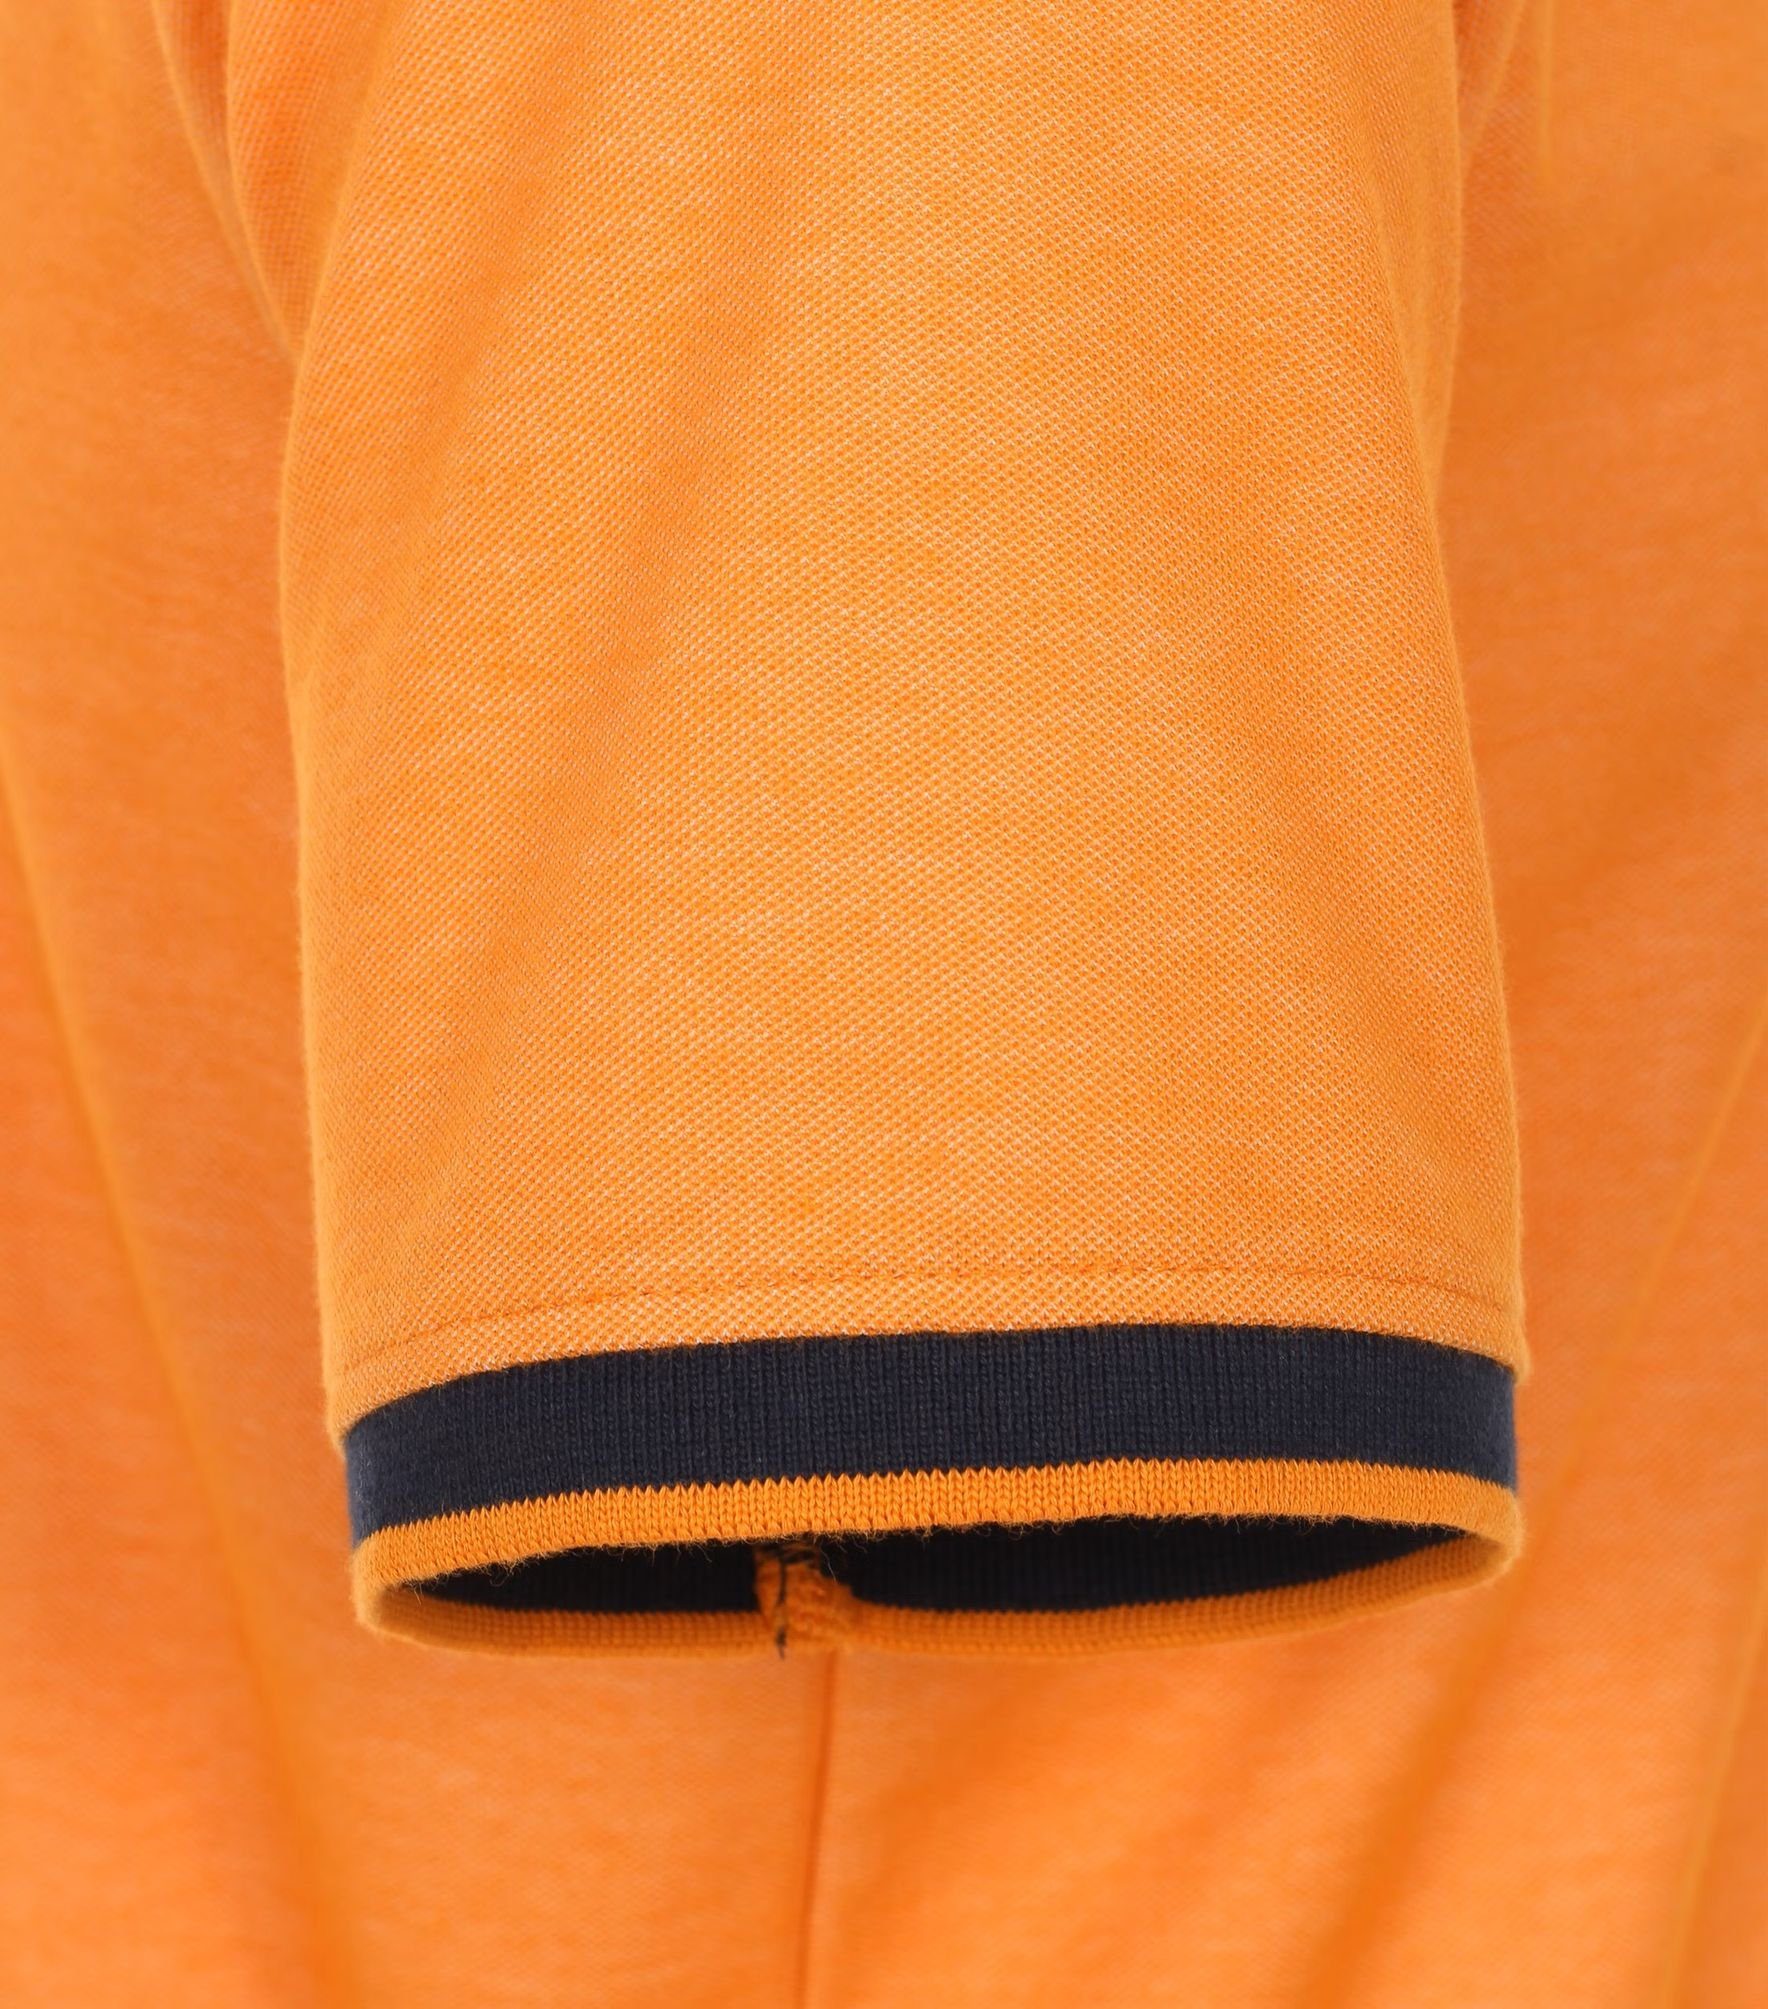 (466) CASAMODA orange 923877500 Poloshirt